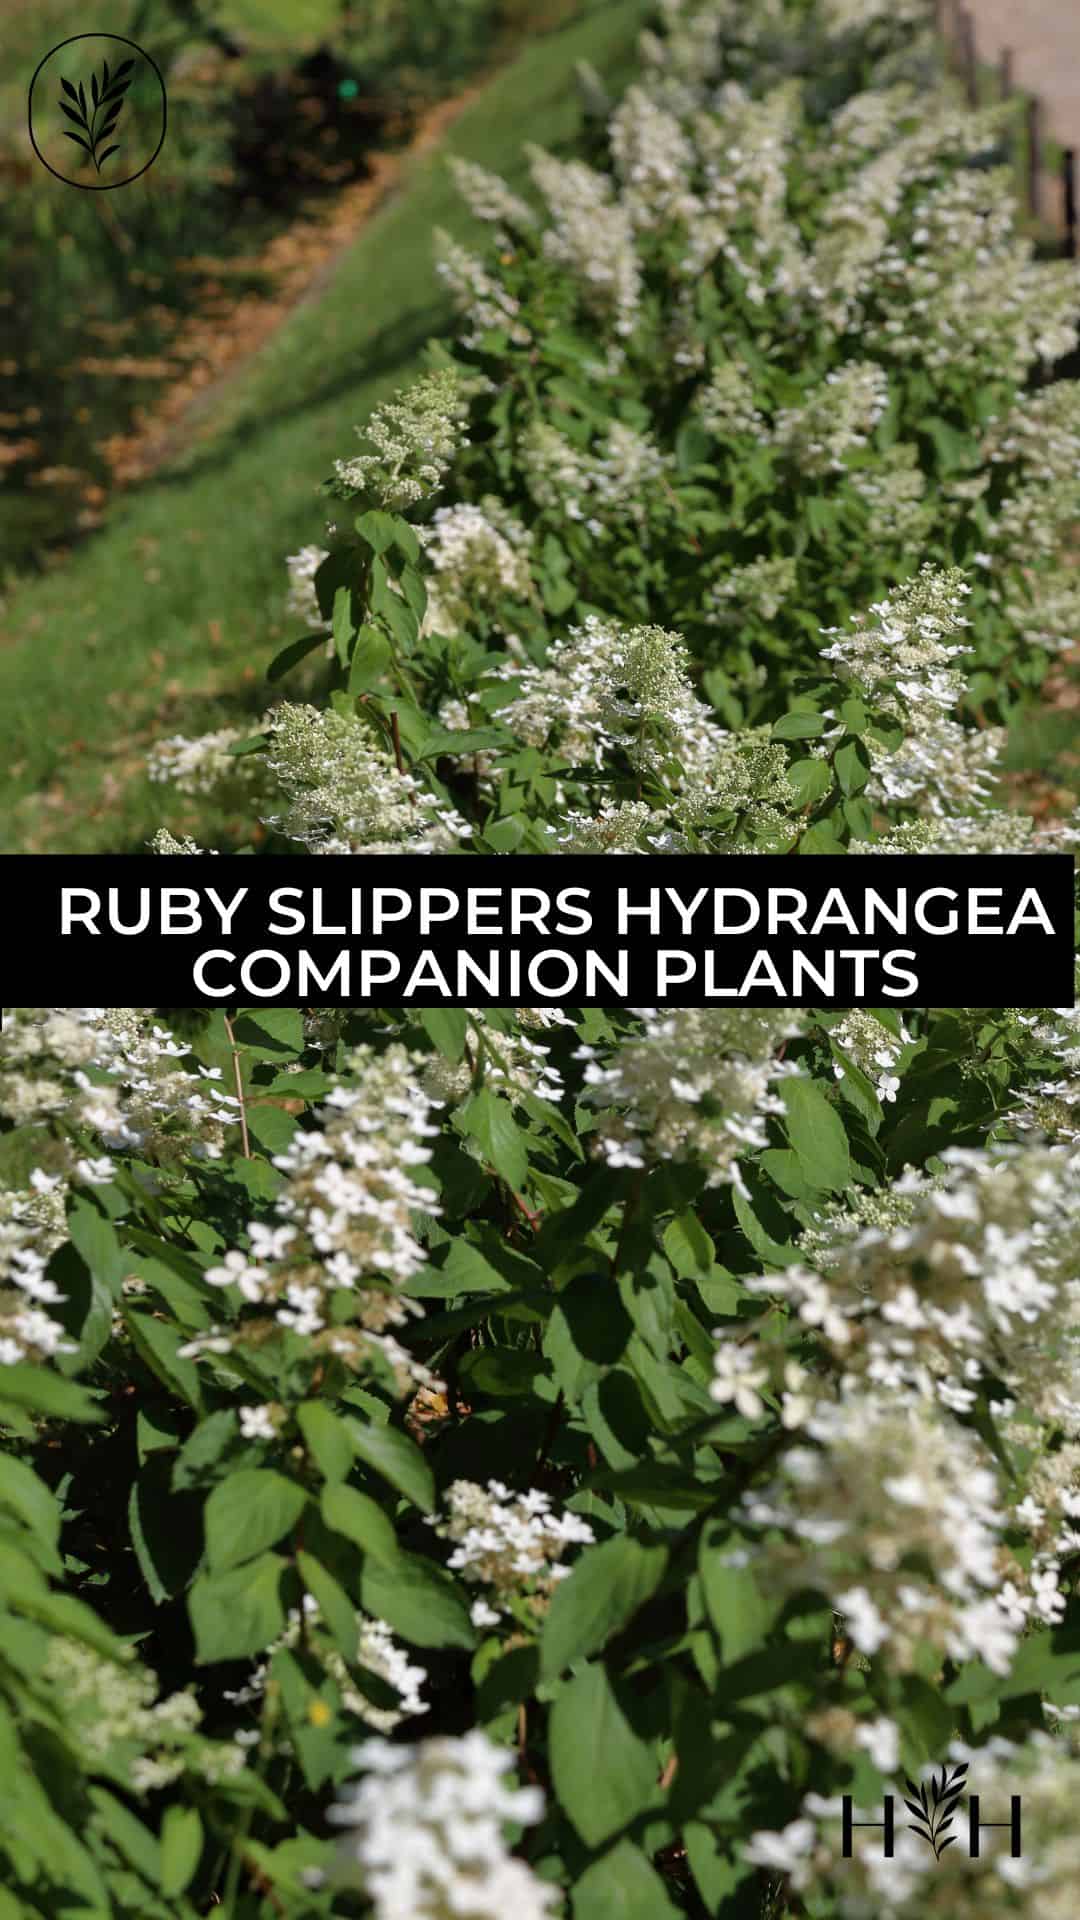 Ruby slippers hydrangea companion plants via @home4theharvest